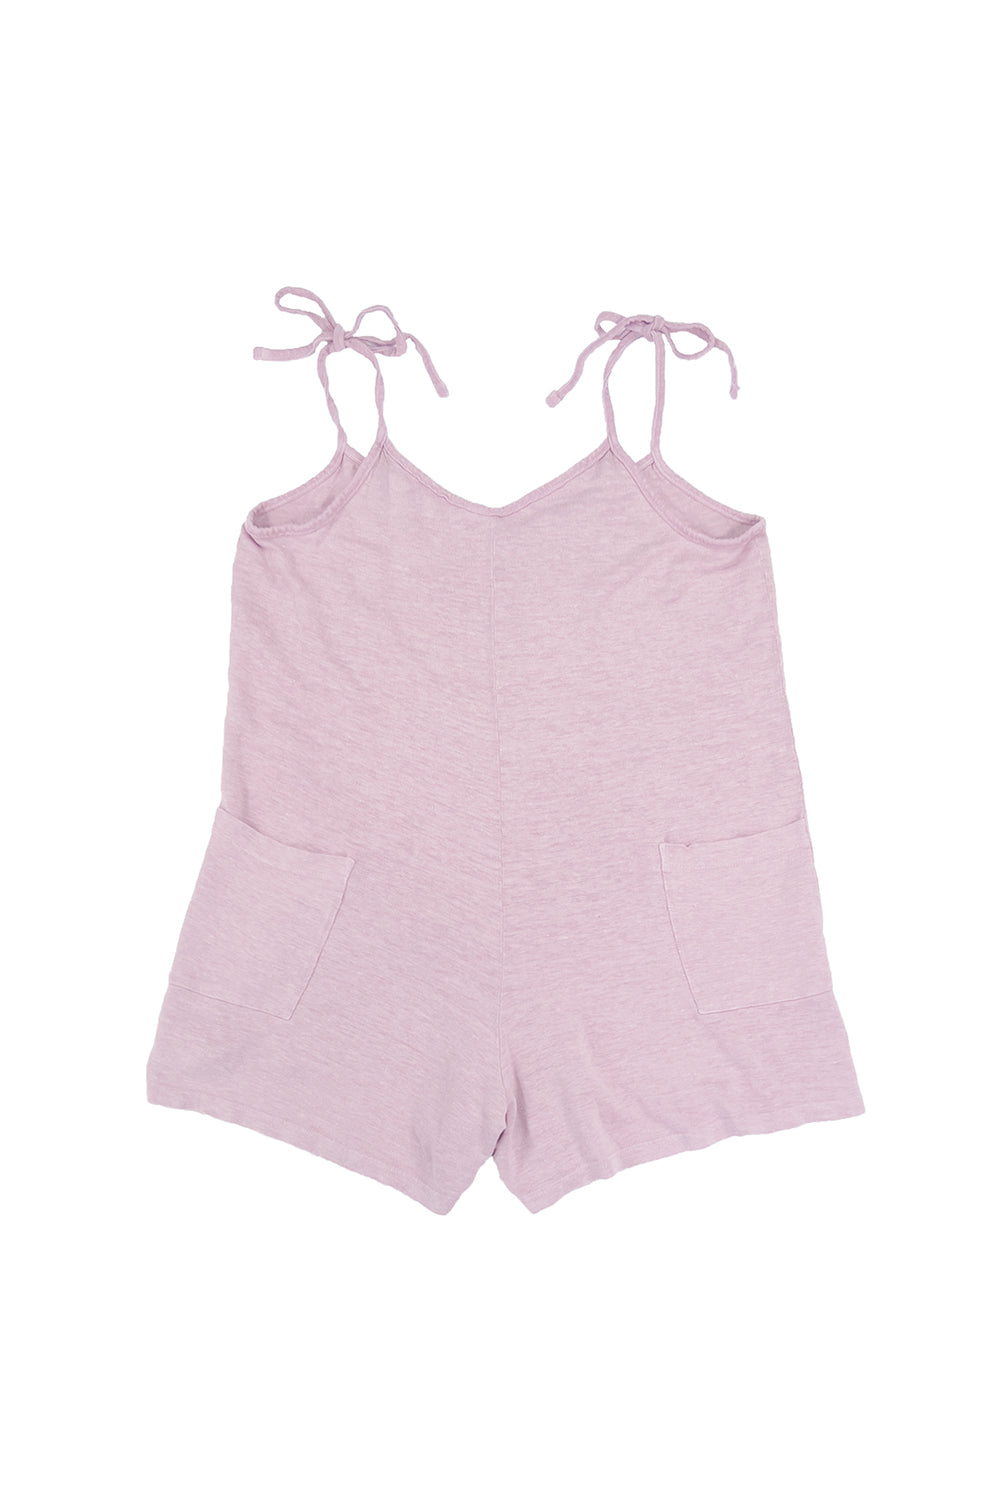 100% Hemp Sespe Short | Jungmaven Hemp Clothing & Accessories / Color: Rose Quartz